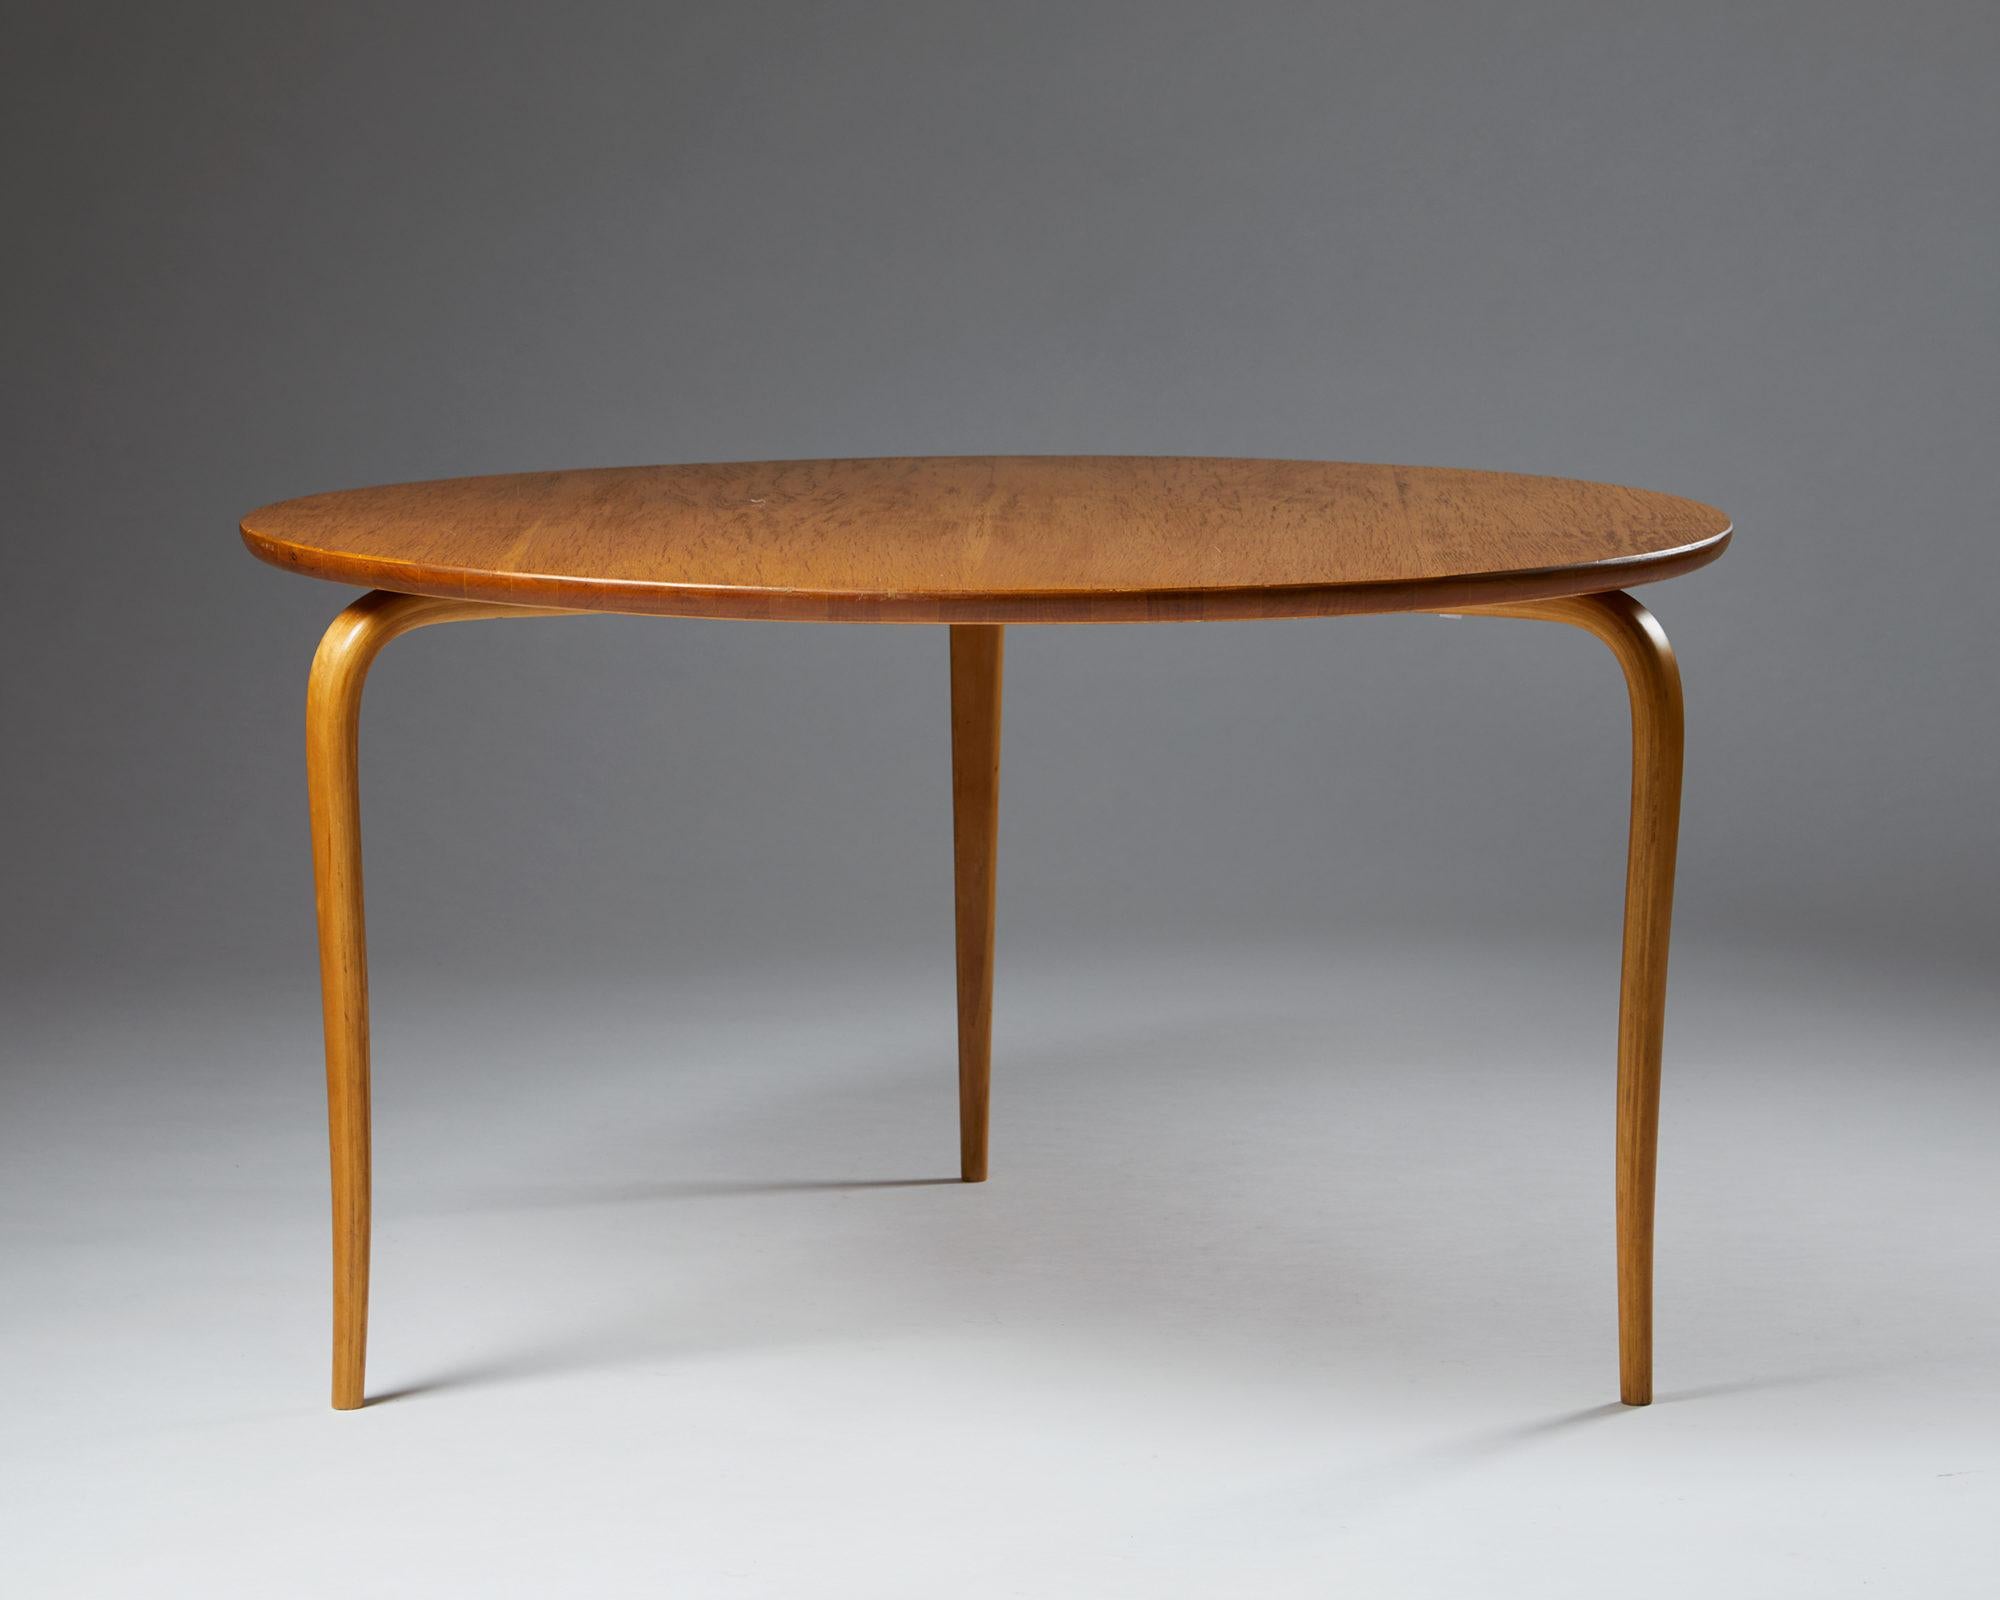 Scandinavian Modern Occasional Table “Annika” by Bruno Mathsson for Karl Mathsson, Sweden, 1936